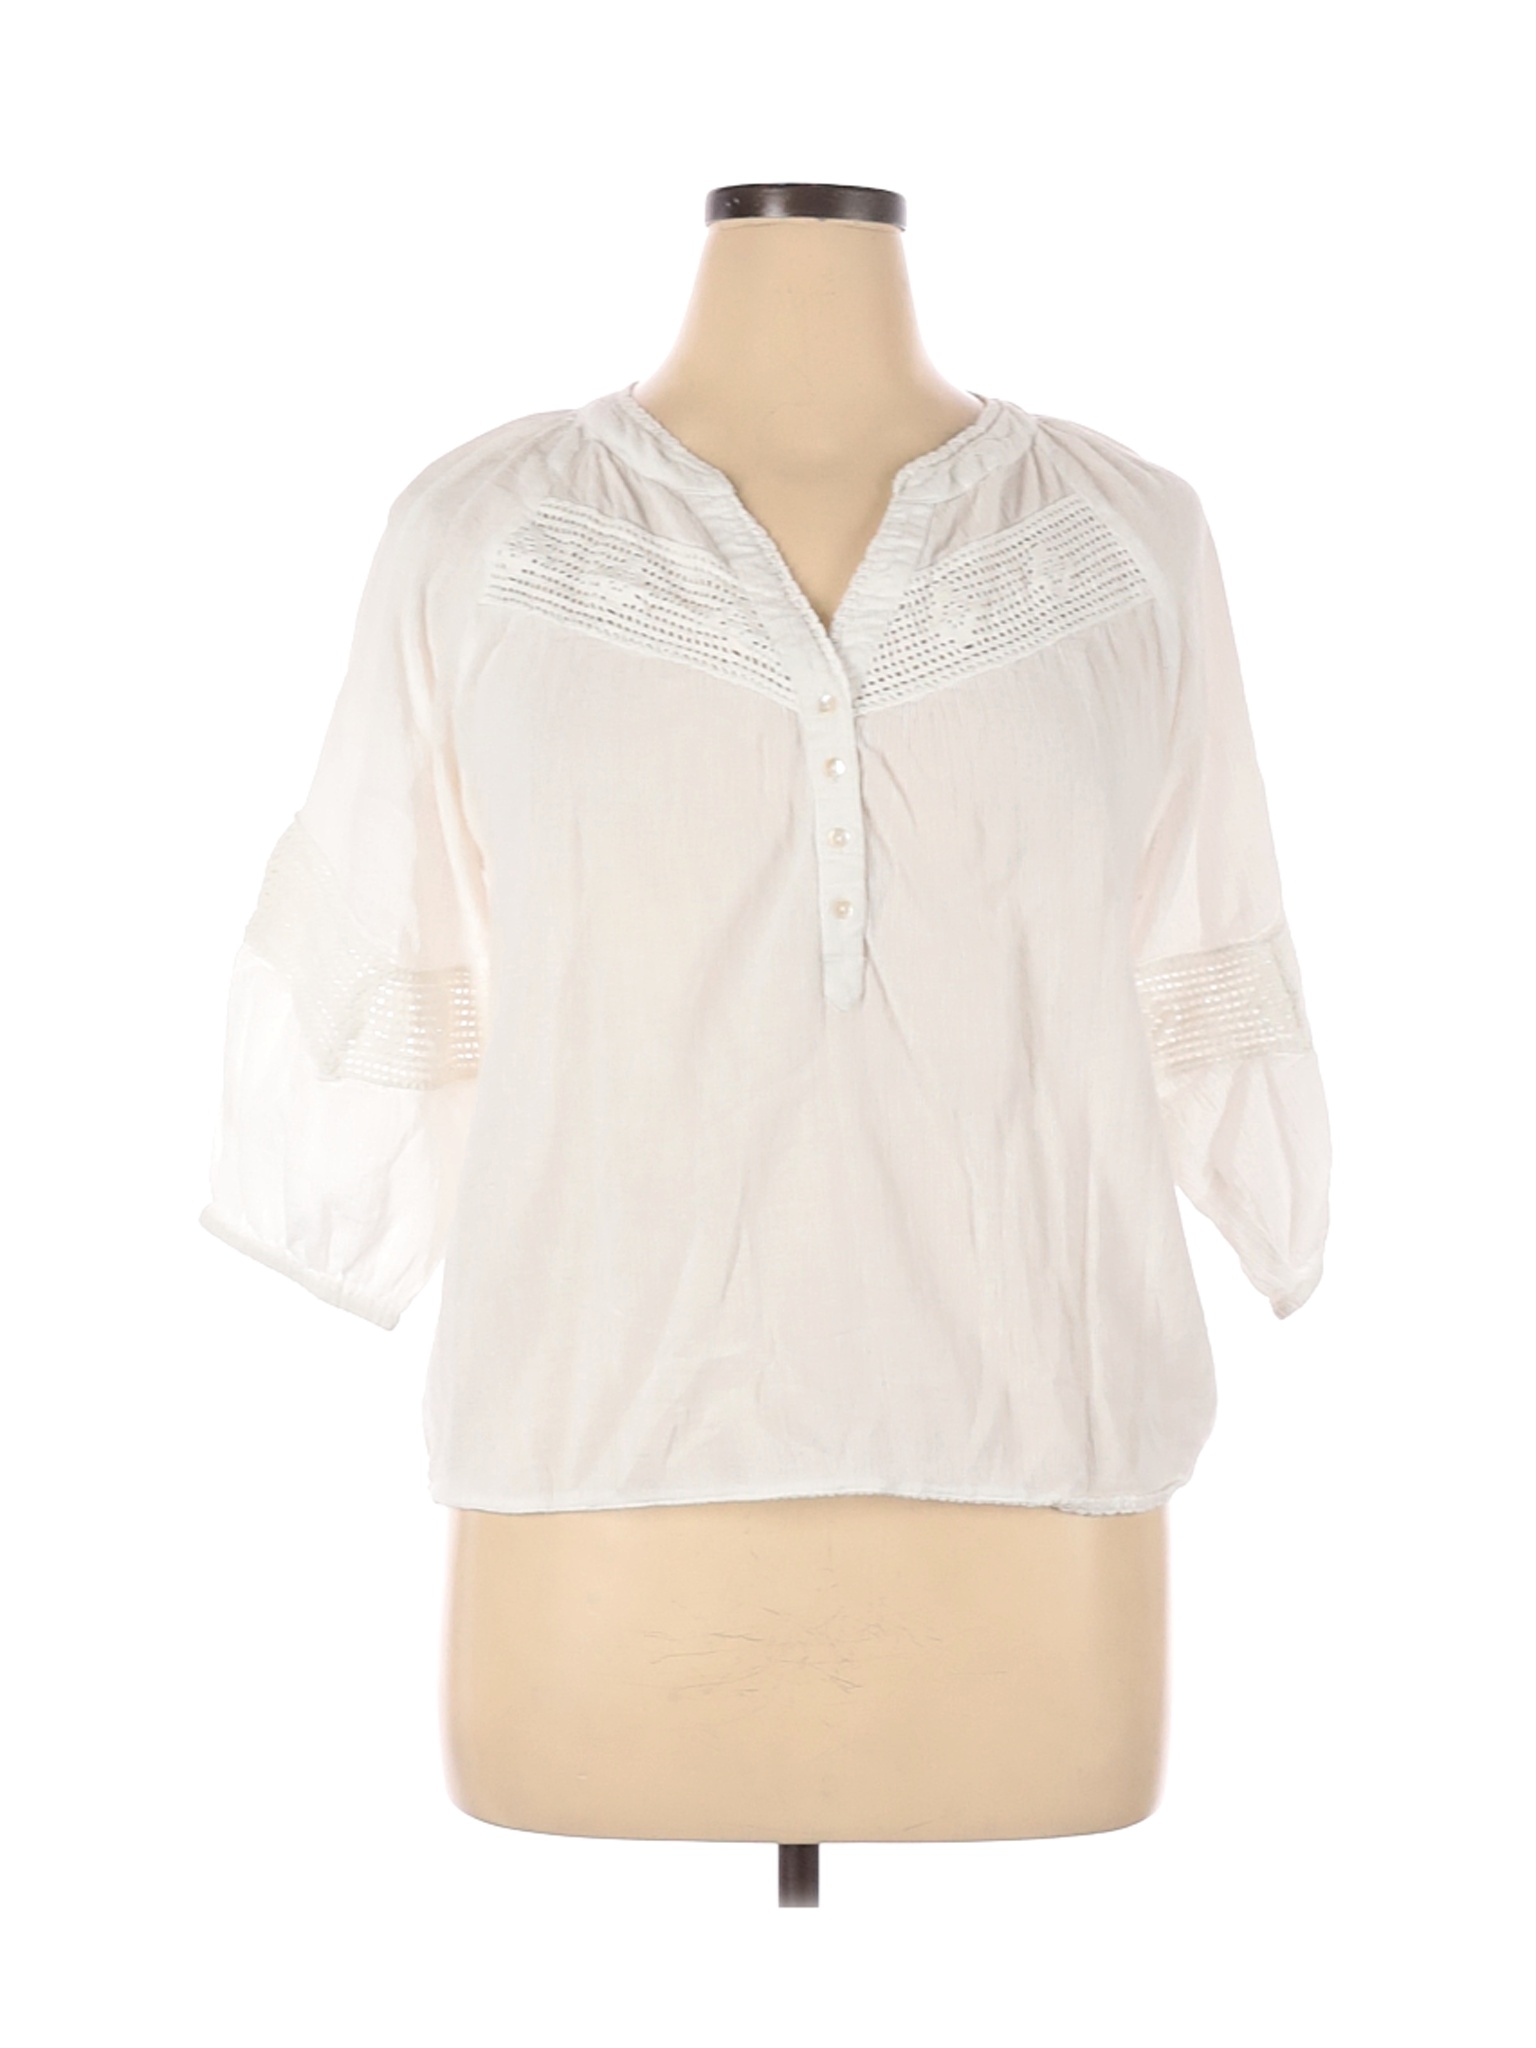 Hippie Laundry Women White 3/4 Sleeve Blouse XL | eBay